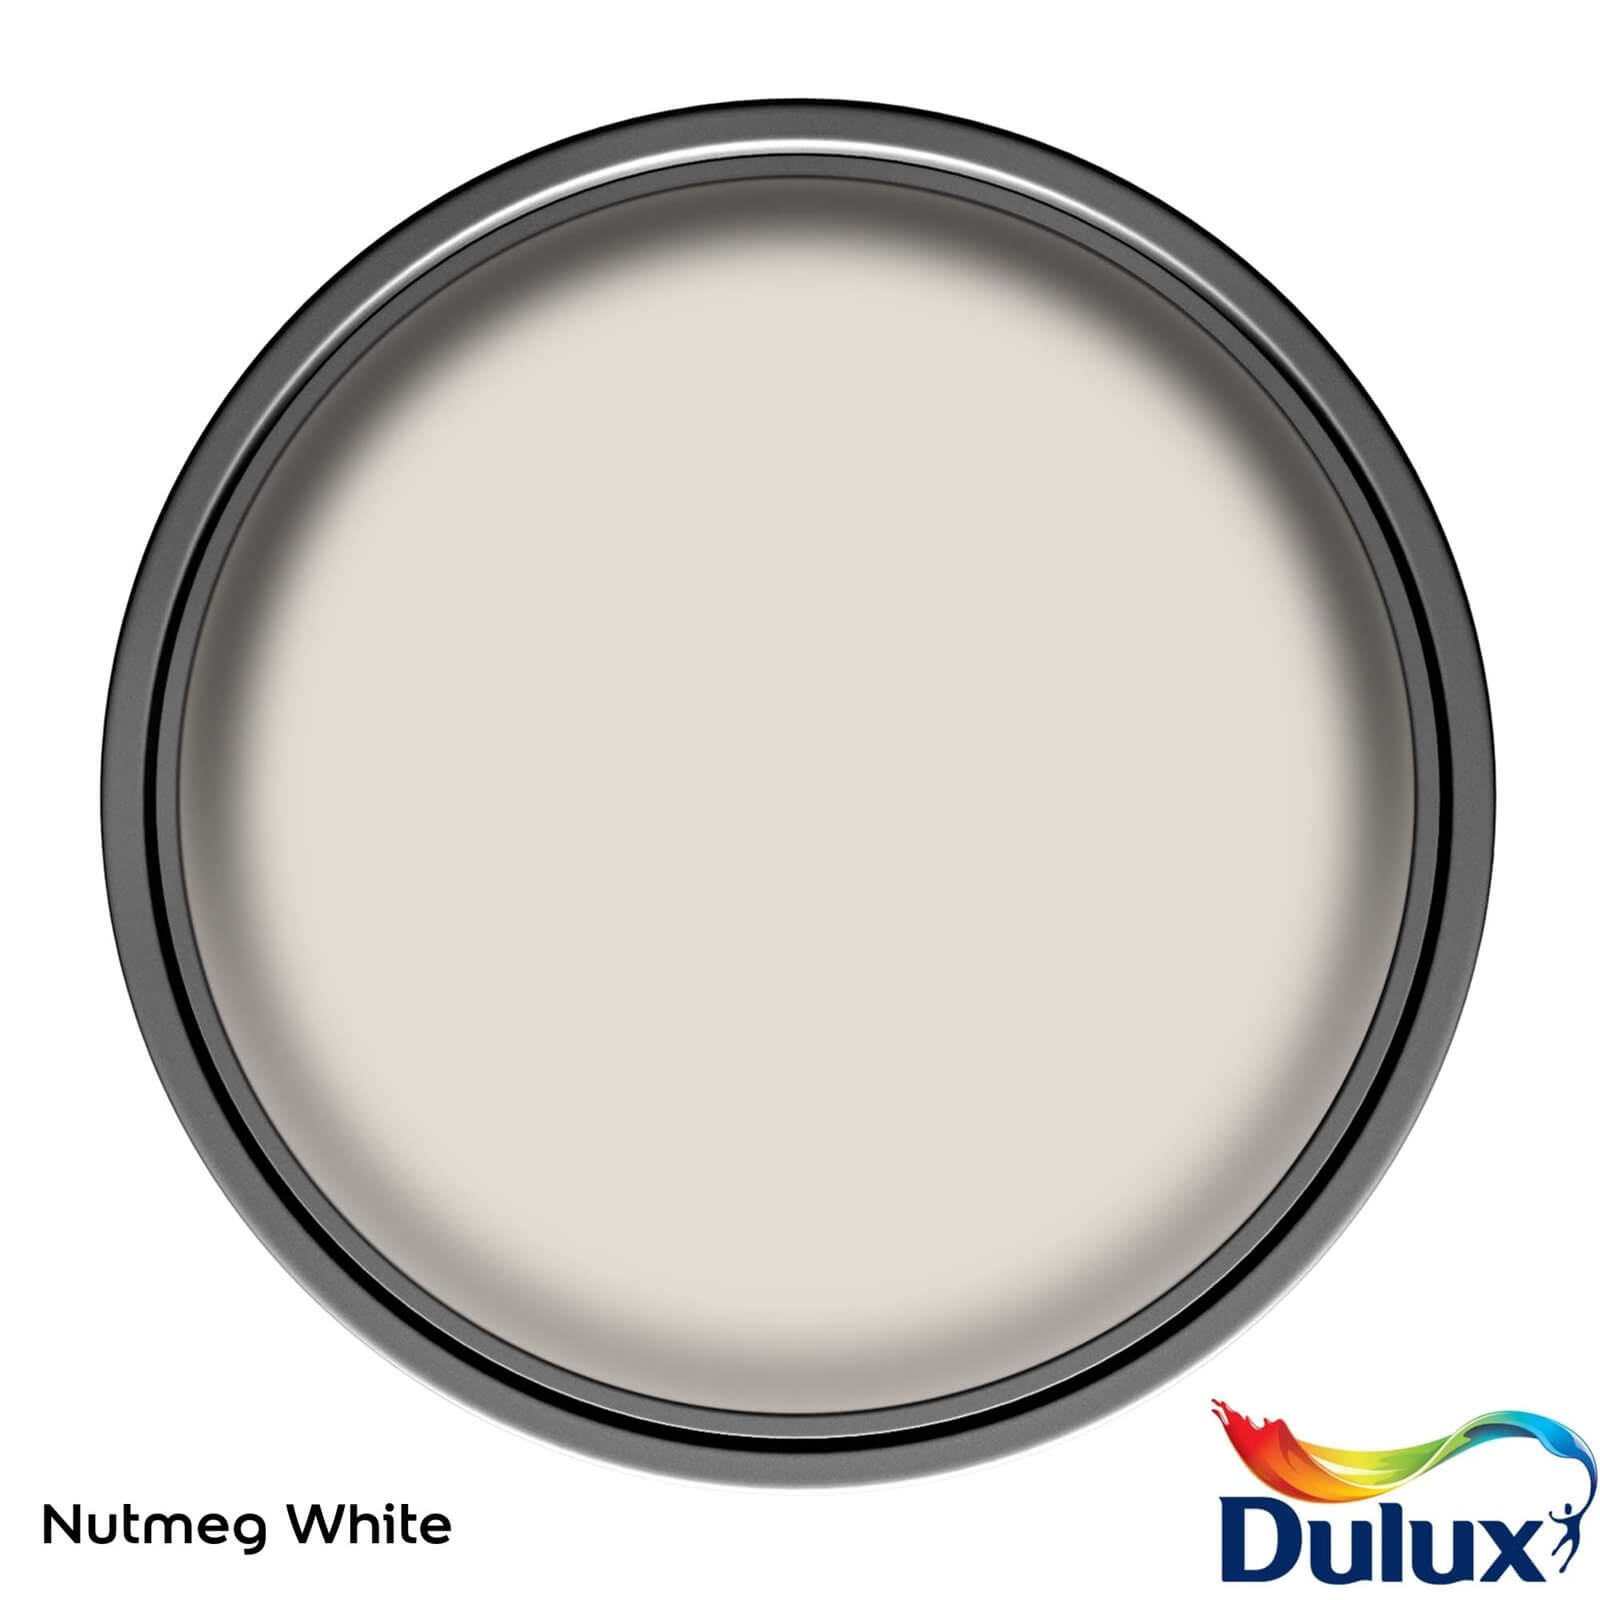 Dulux Easycare Bathroom Nutmeg White Soft Sheen Paint - 2.5L